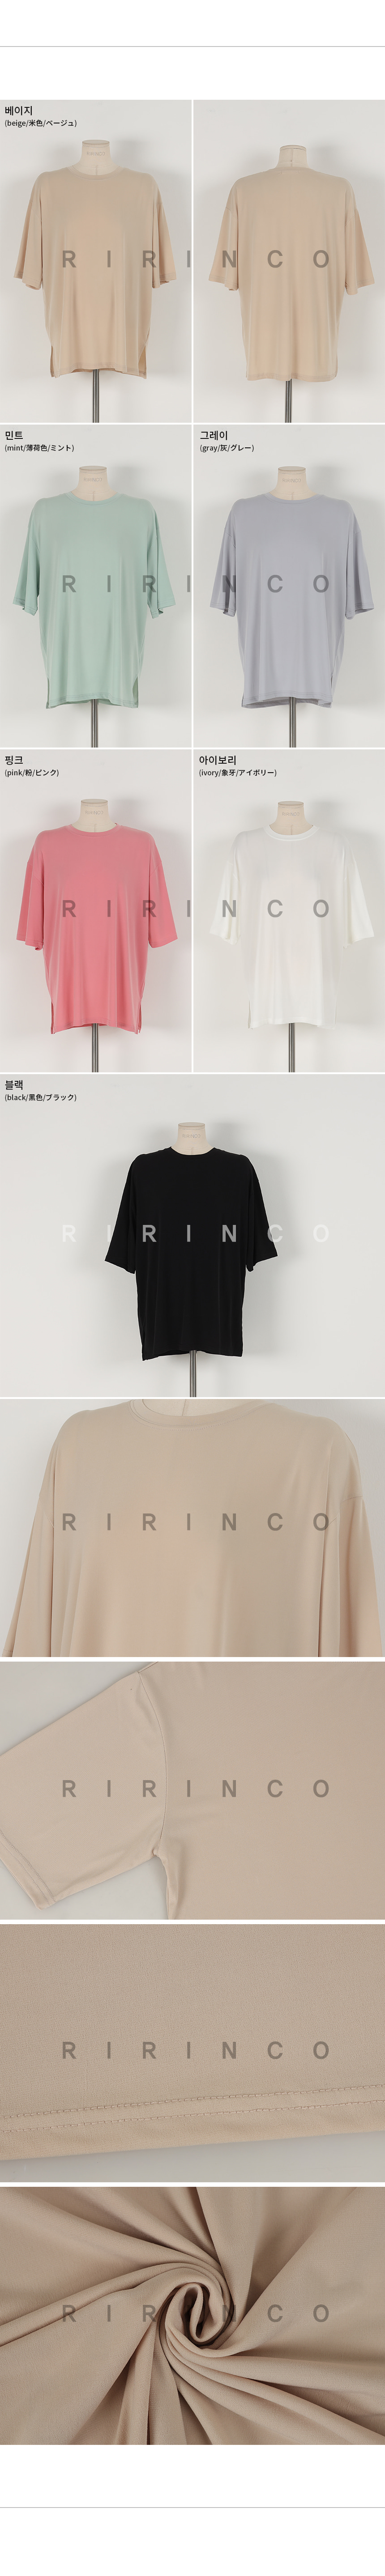 RIRINCO ラウンドネックスリットクールTシャツ